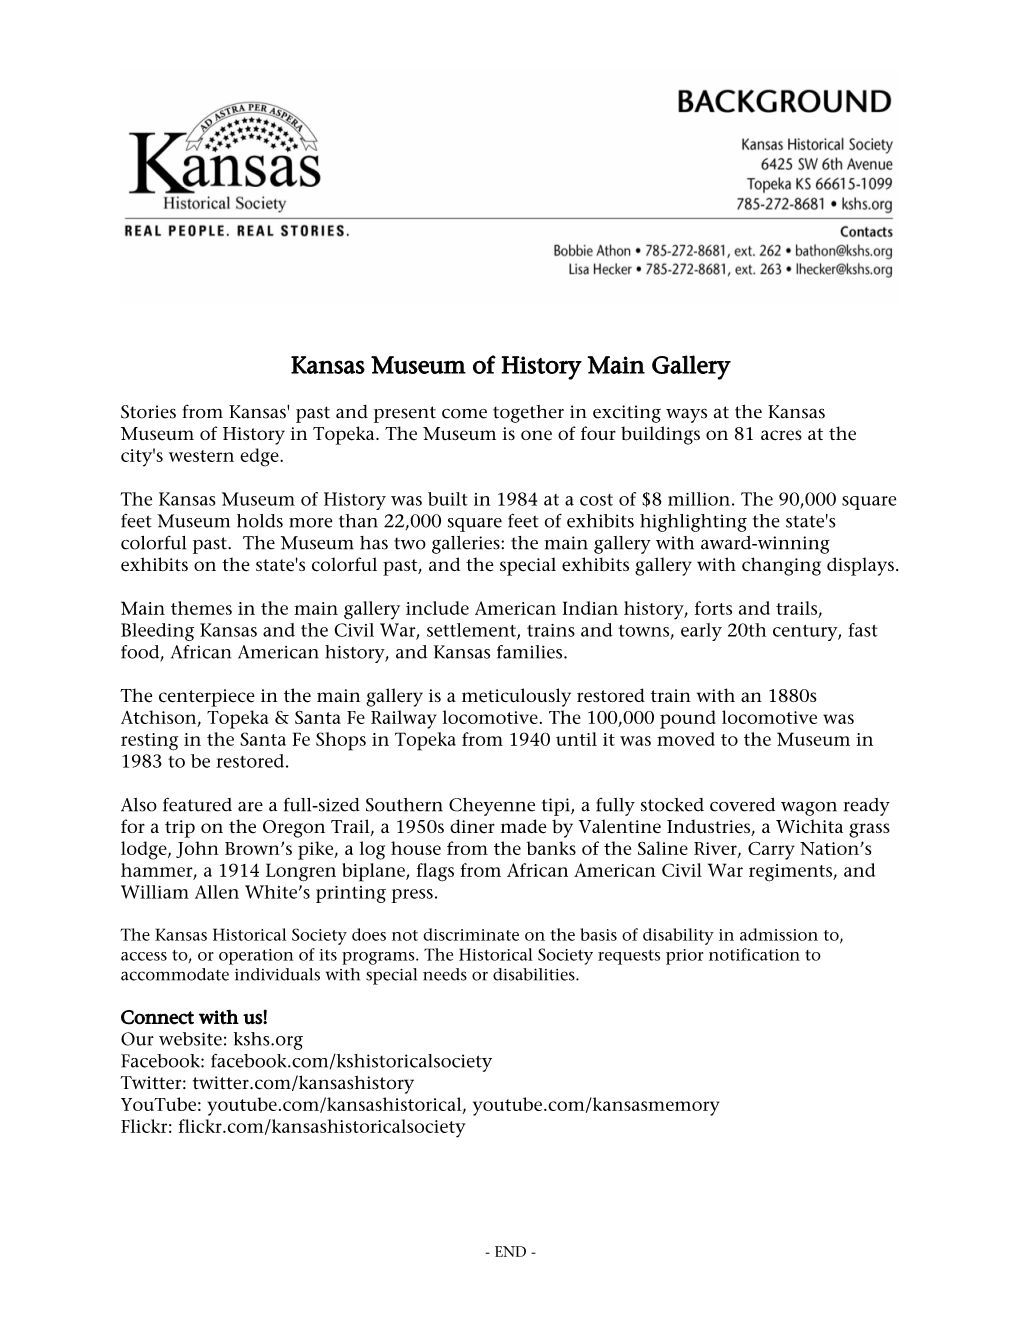 Kansas Museum of History Main Gallery